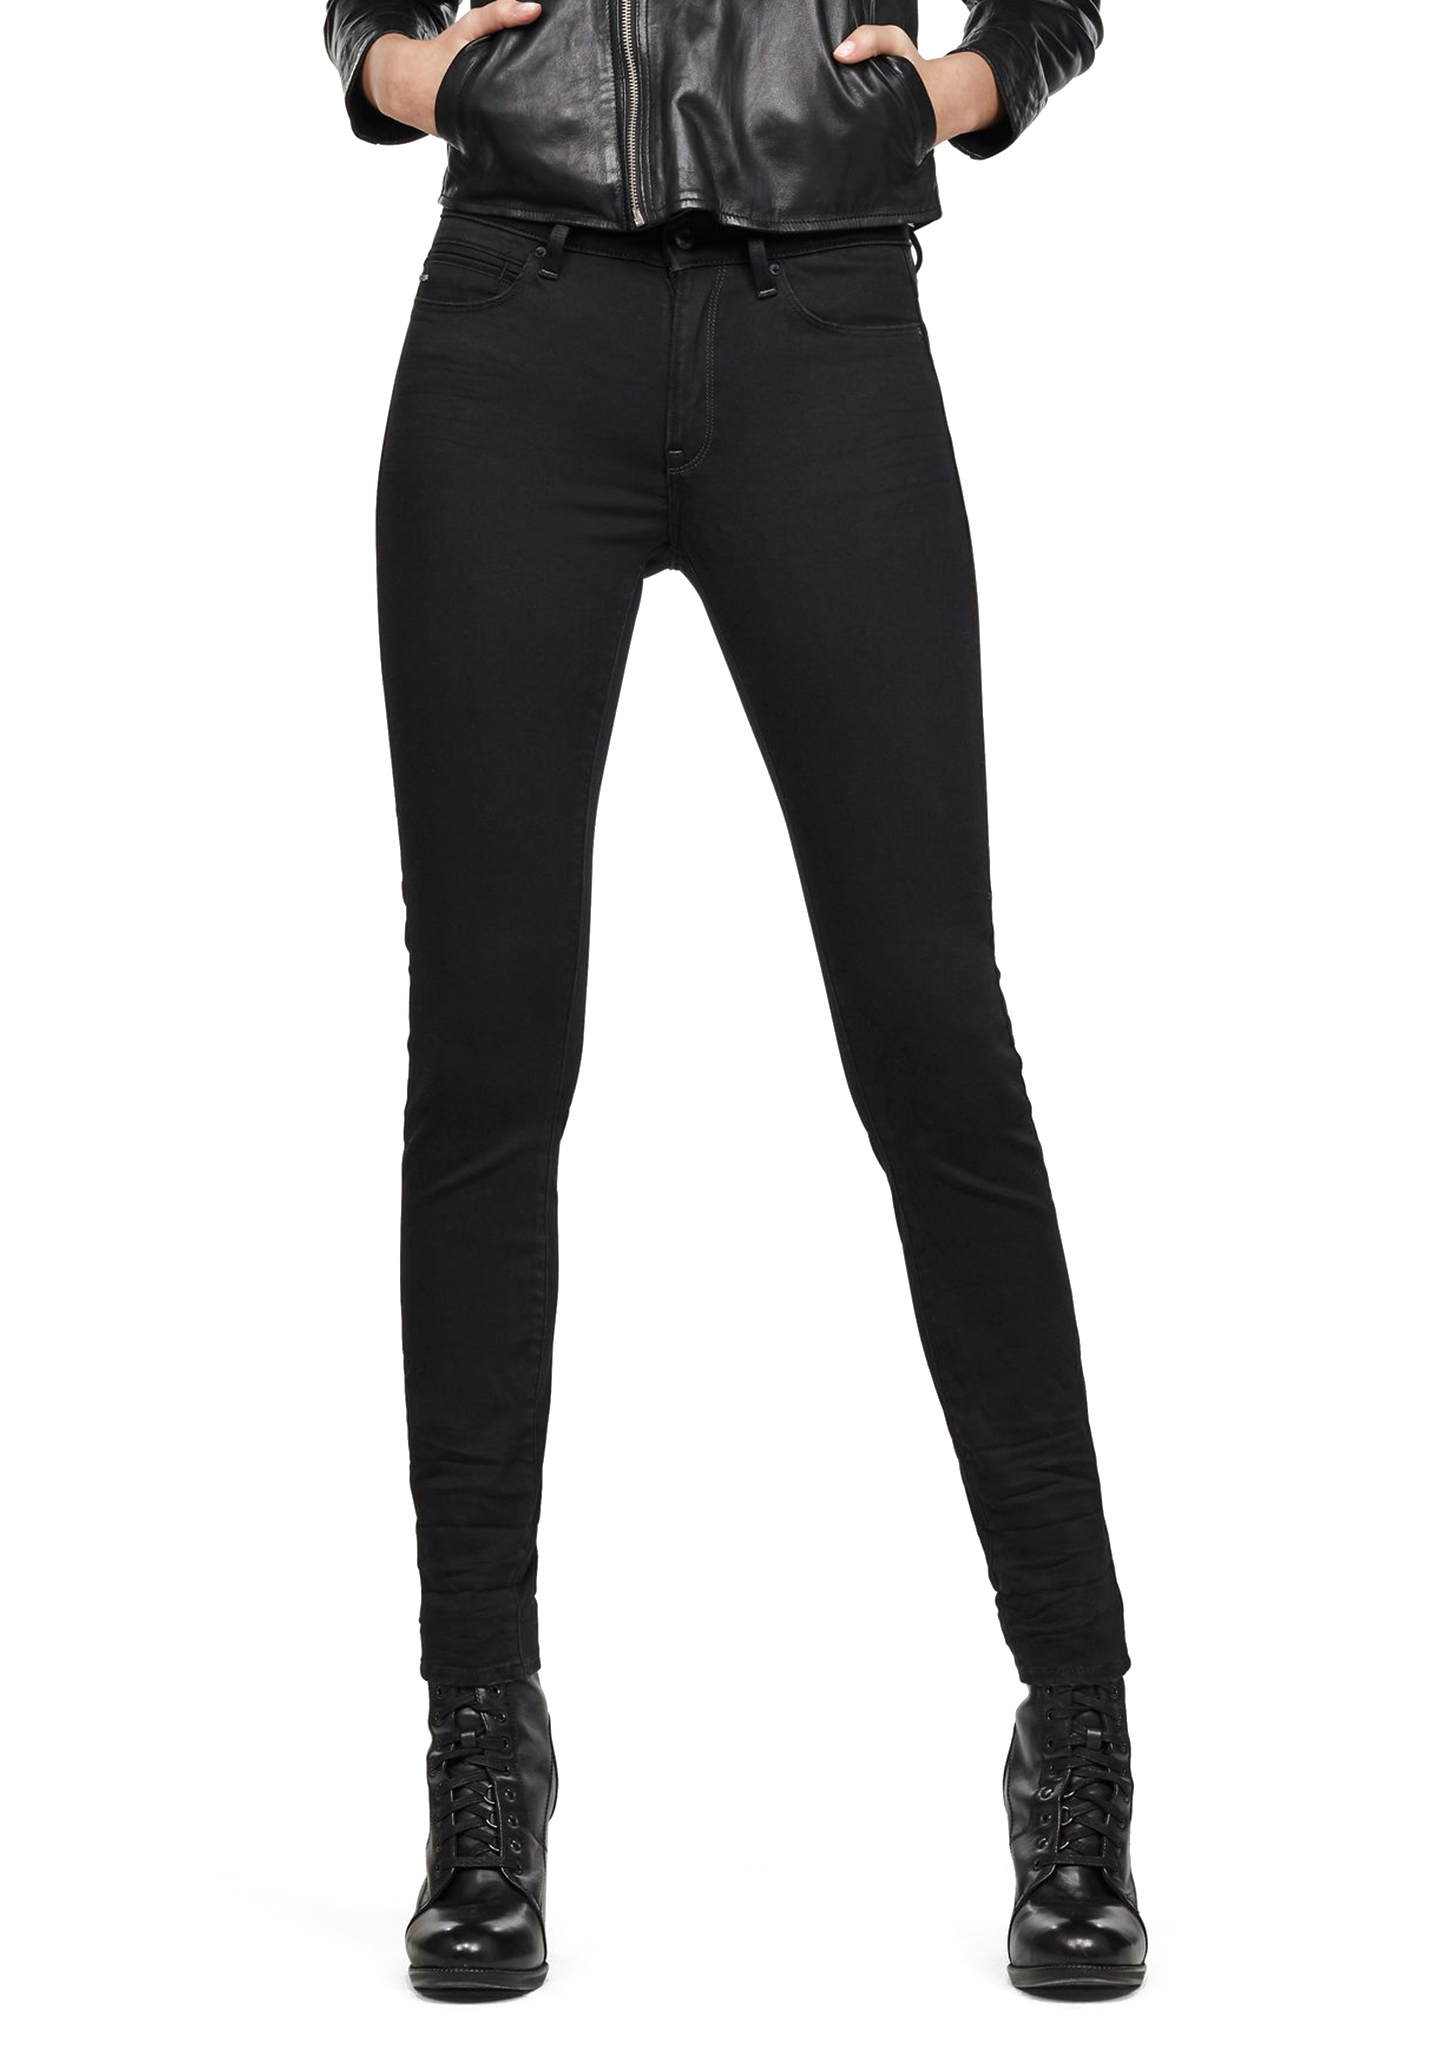 G-Star Shape High Super Skinny Yield Black Ultimate Stretch Skinny Jeans rinsed 29/28